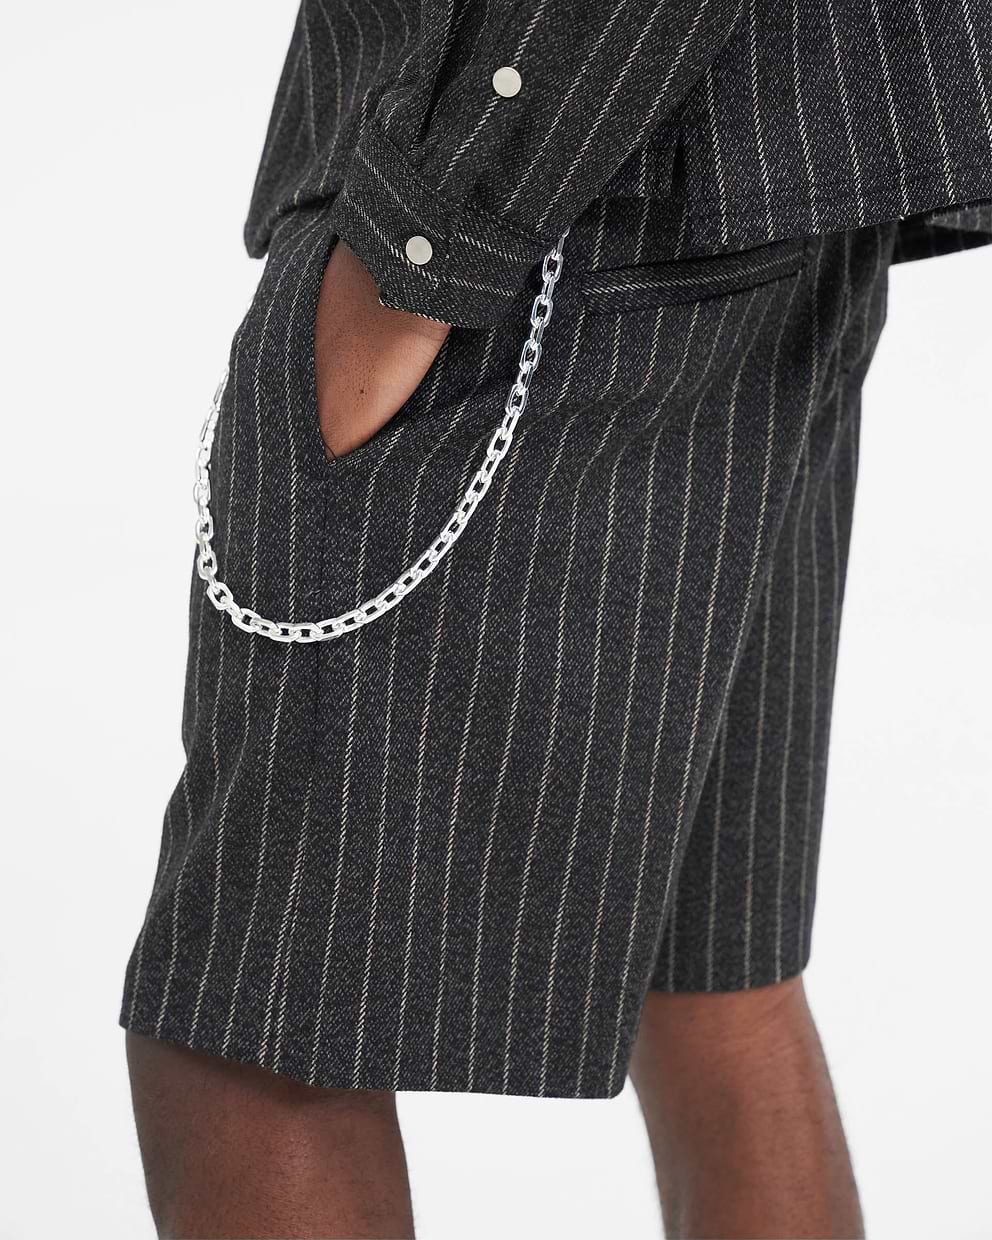 Tailored Short - Black Pinstripe